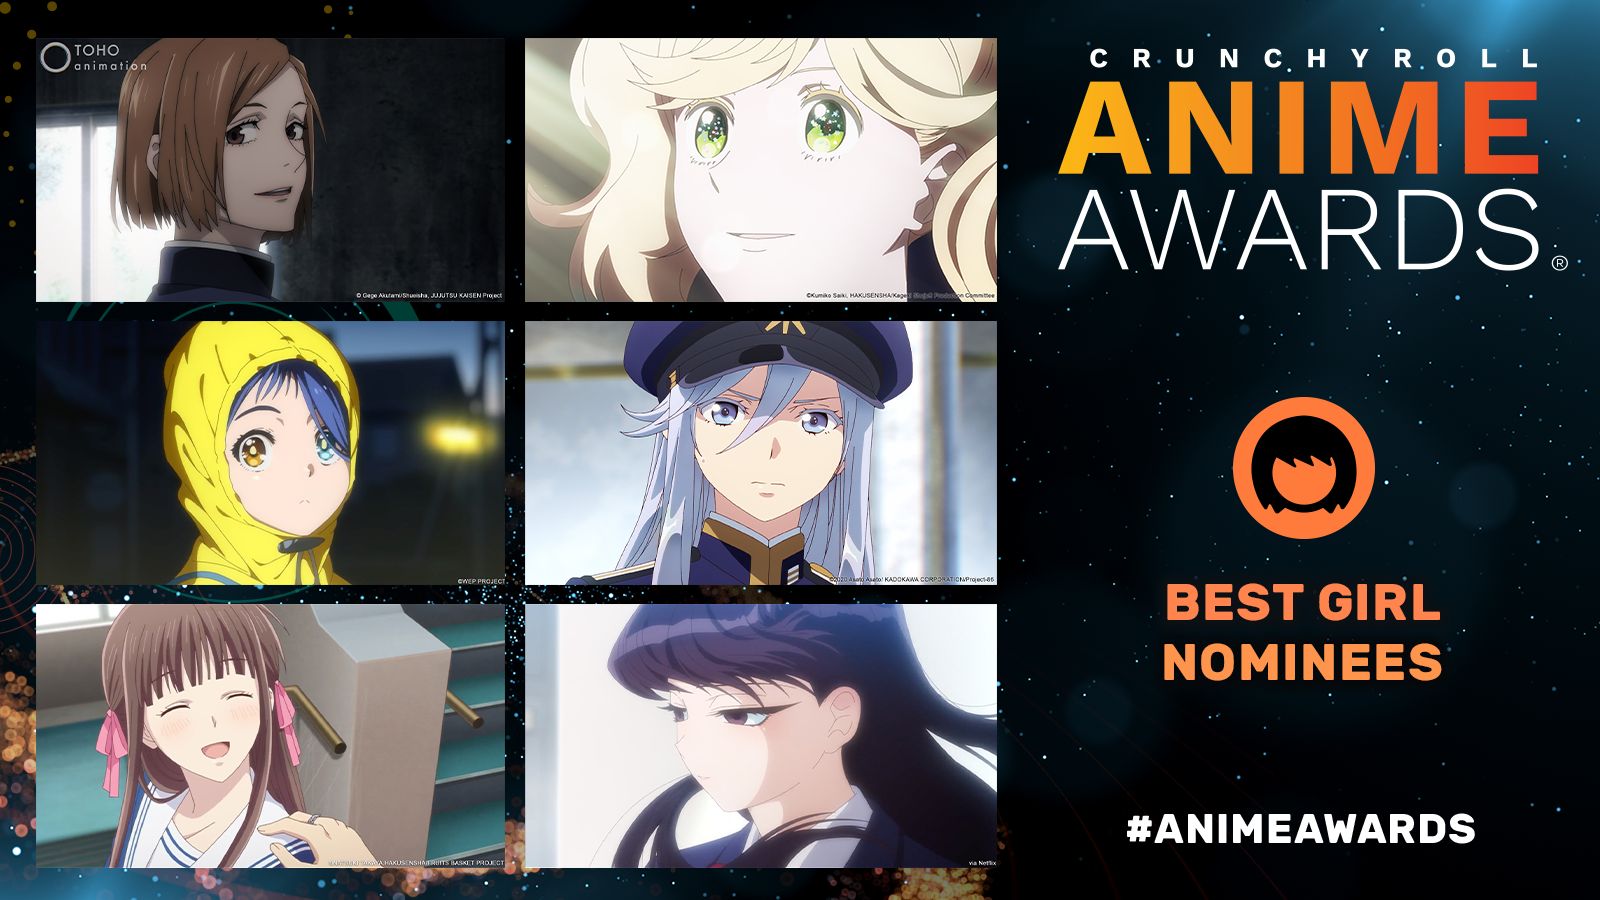 2022 Anime of the Year Awards - Winners - Anime Corner